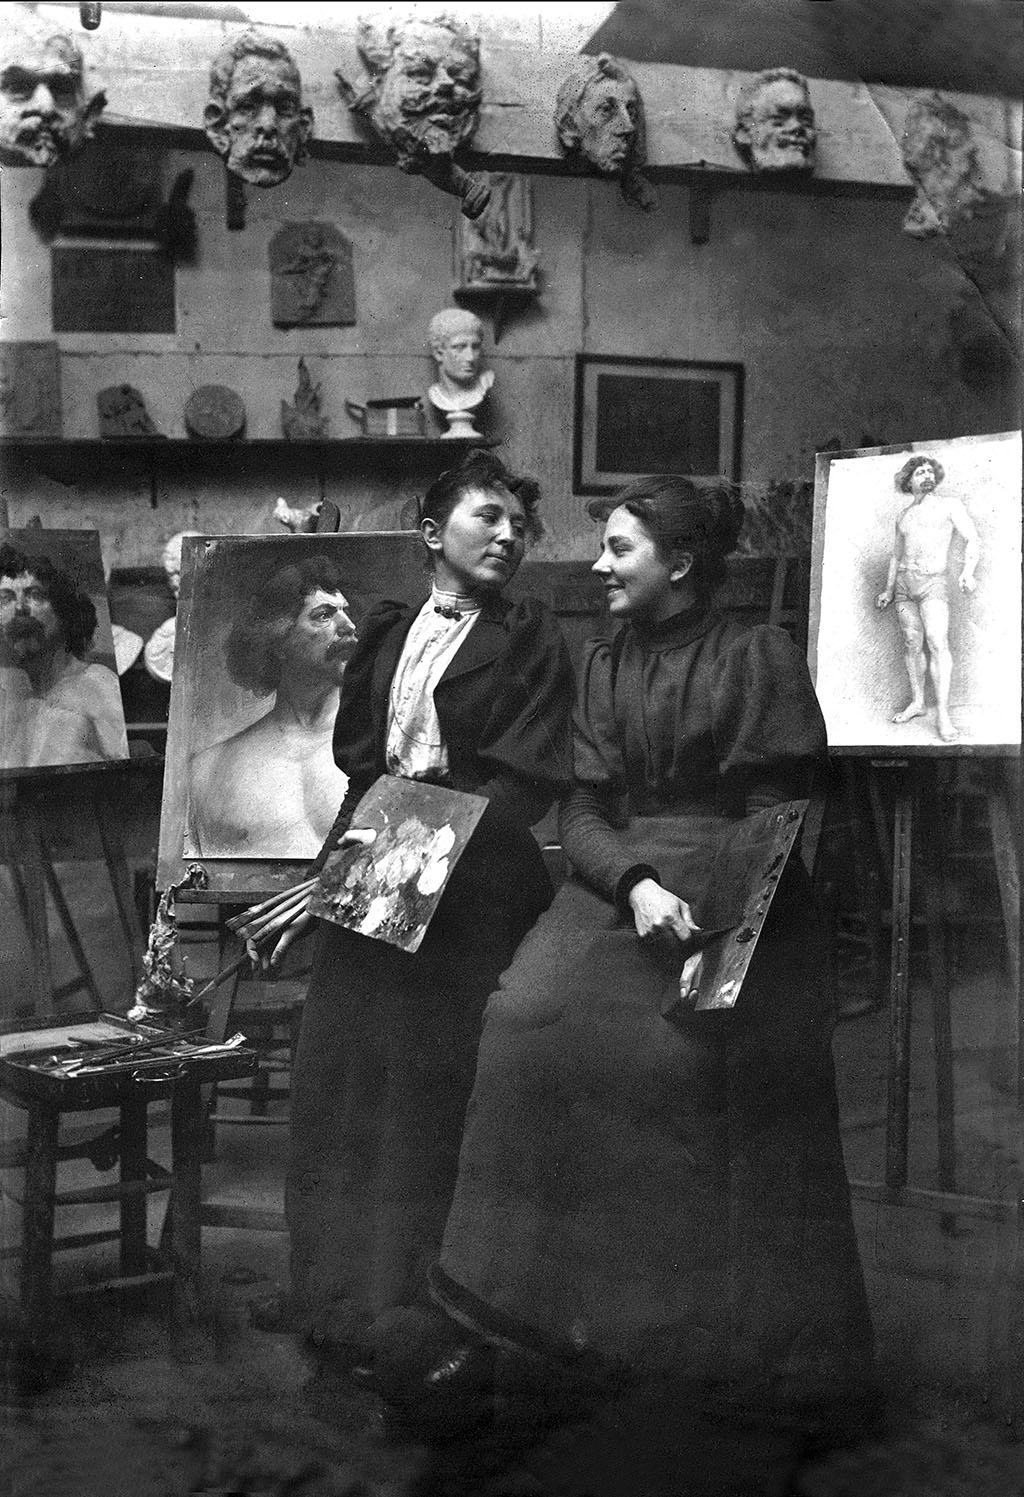 Photograph of Alice Dannenberg und Martha Stettler standing in front of portraits of men.